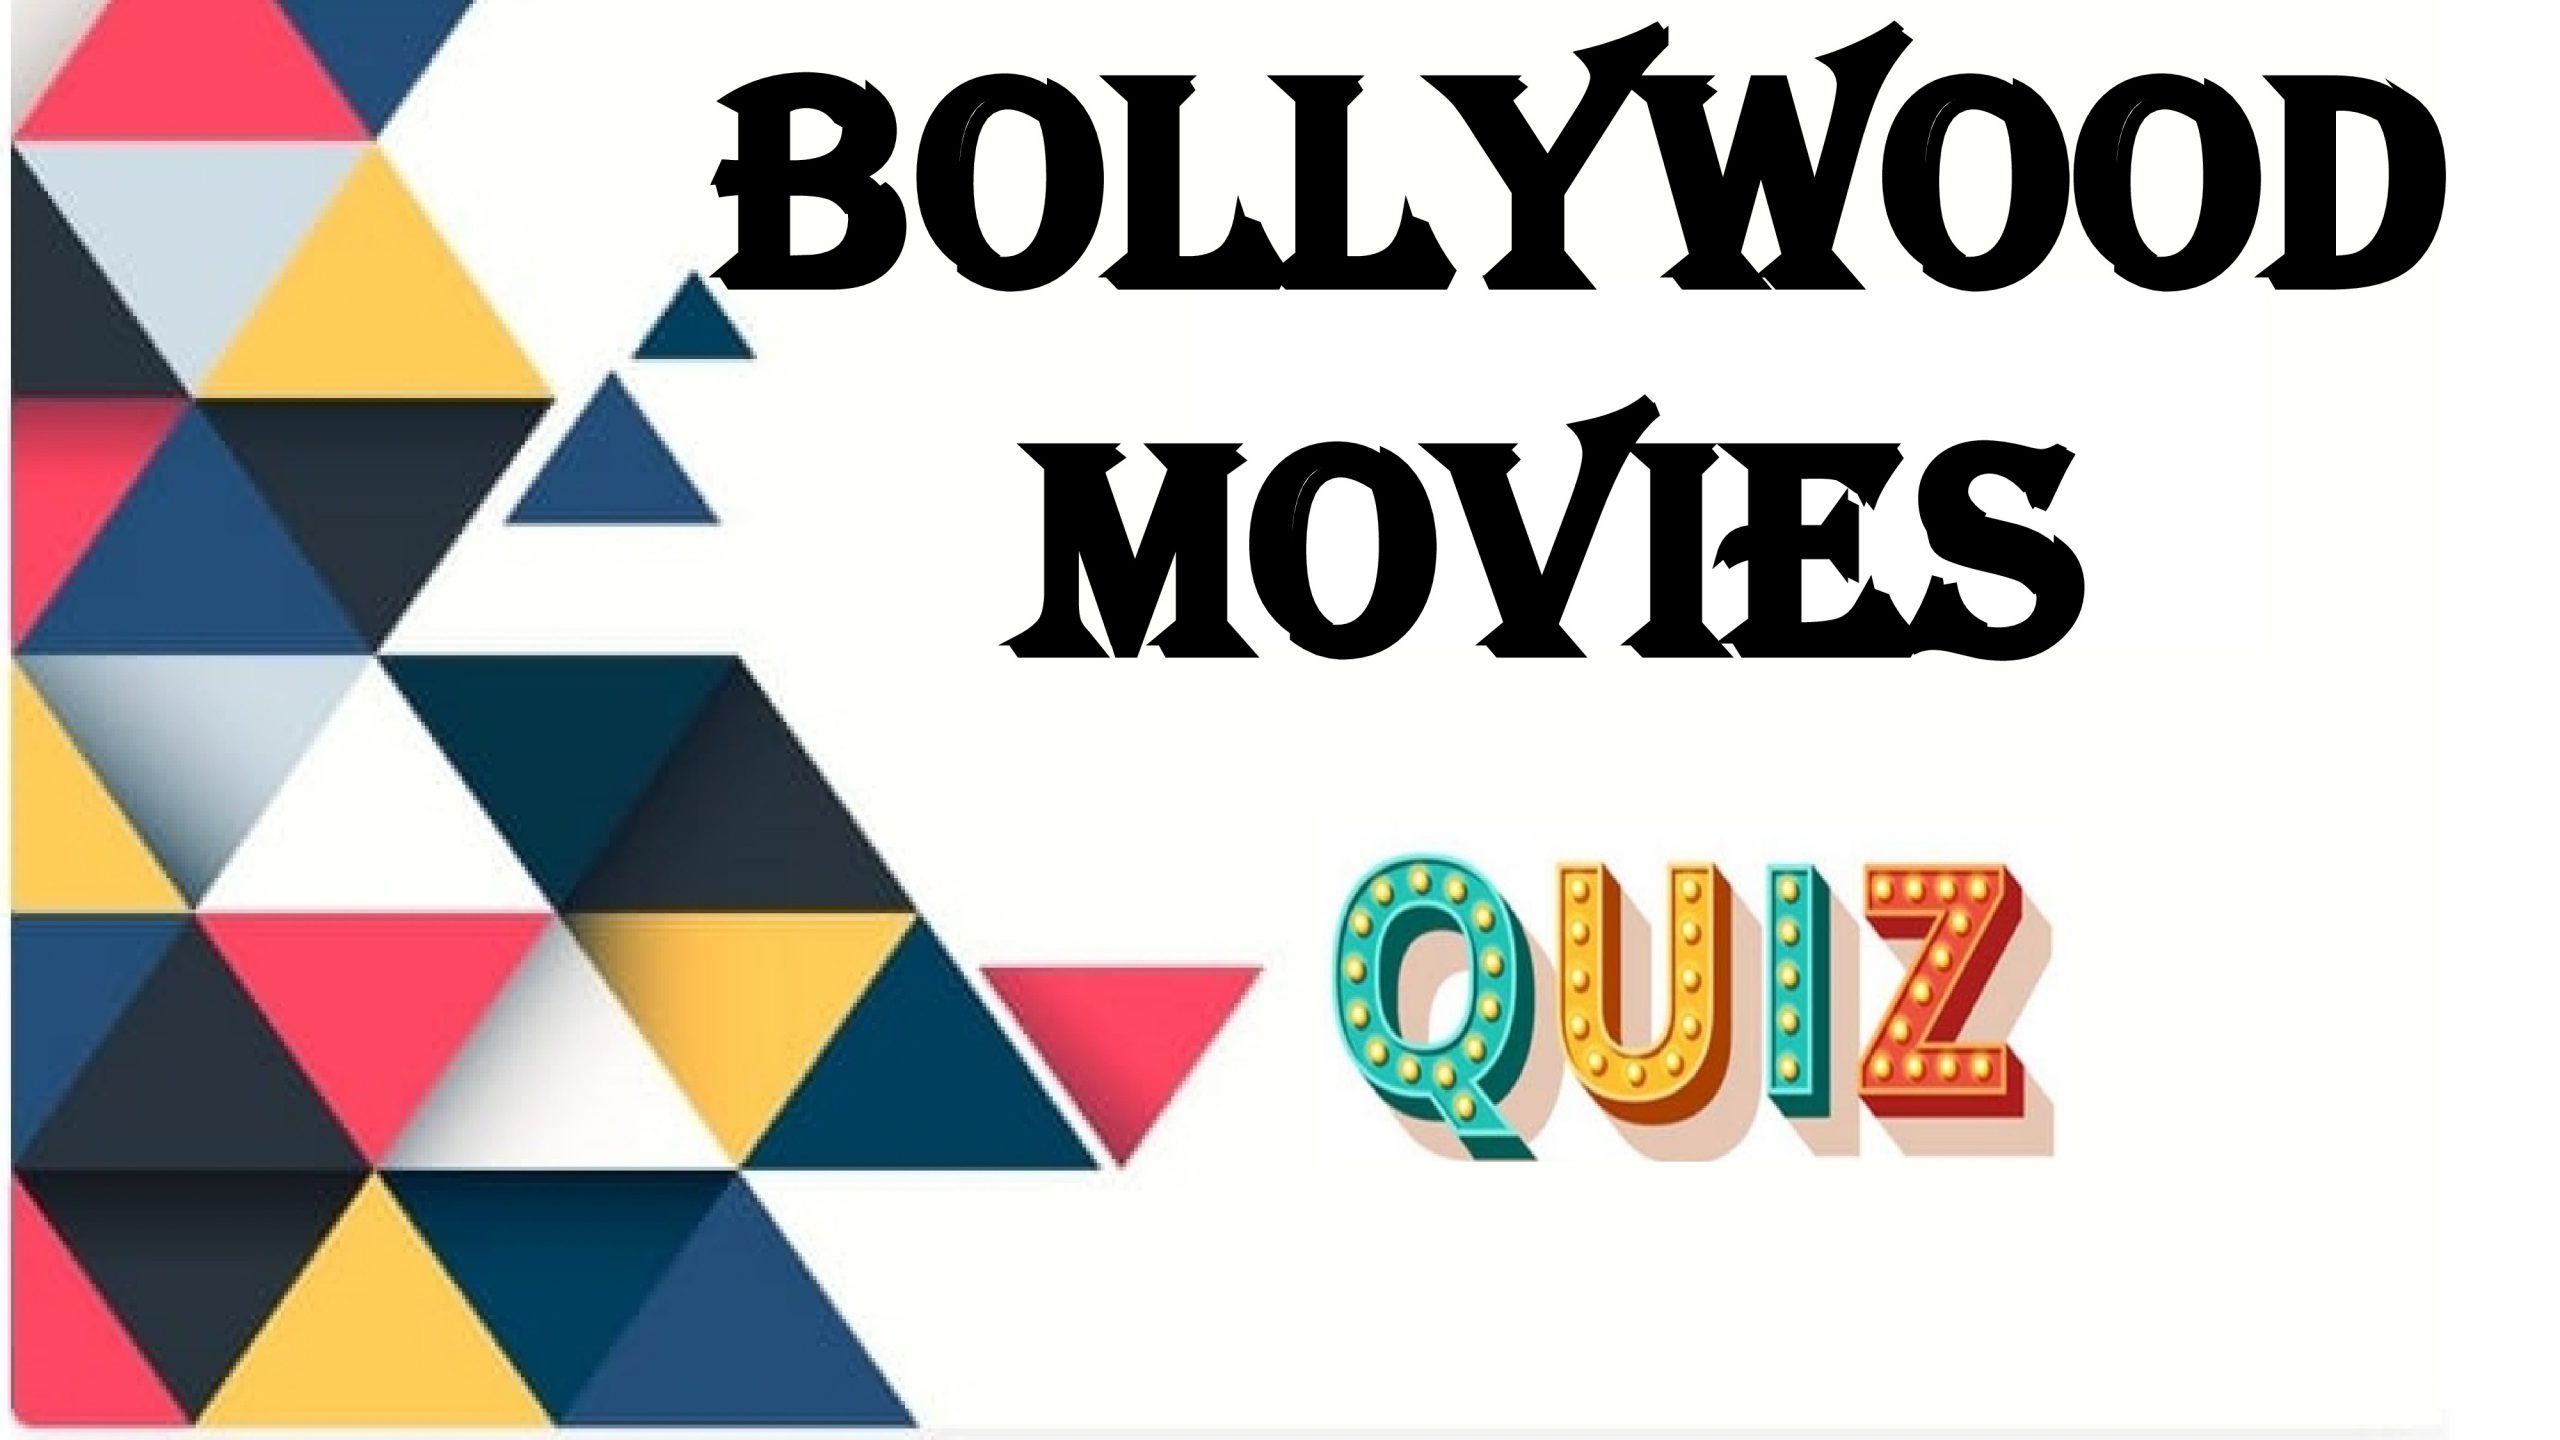 Bollywood movie quiz